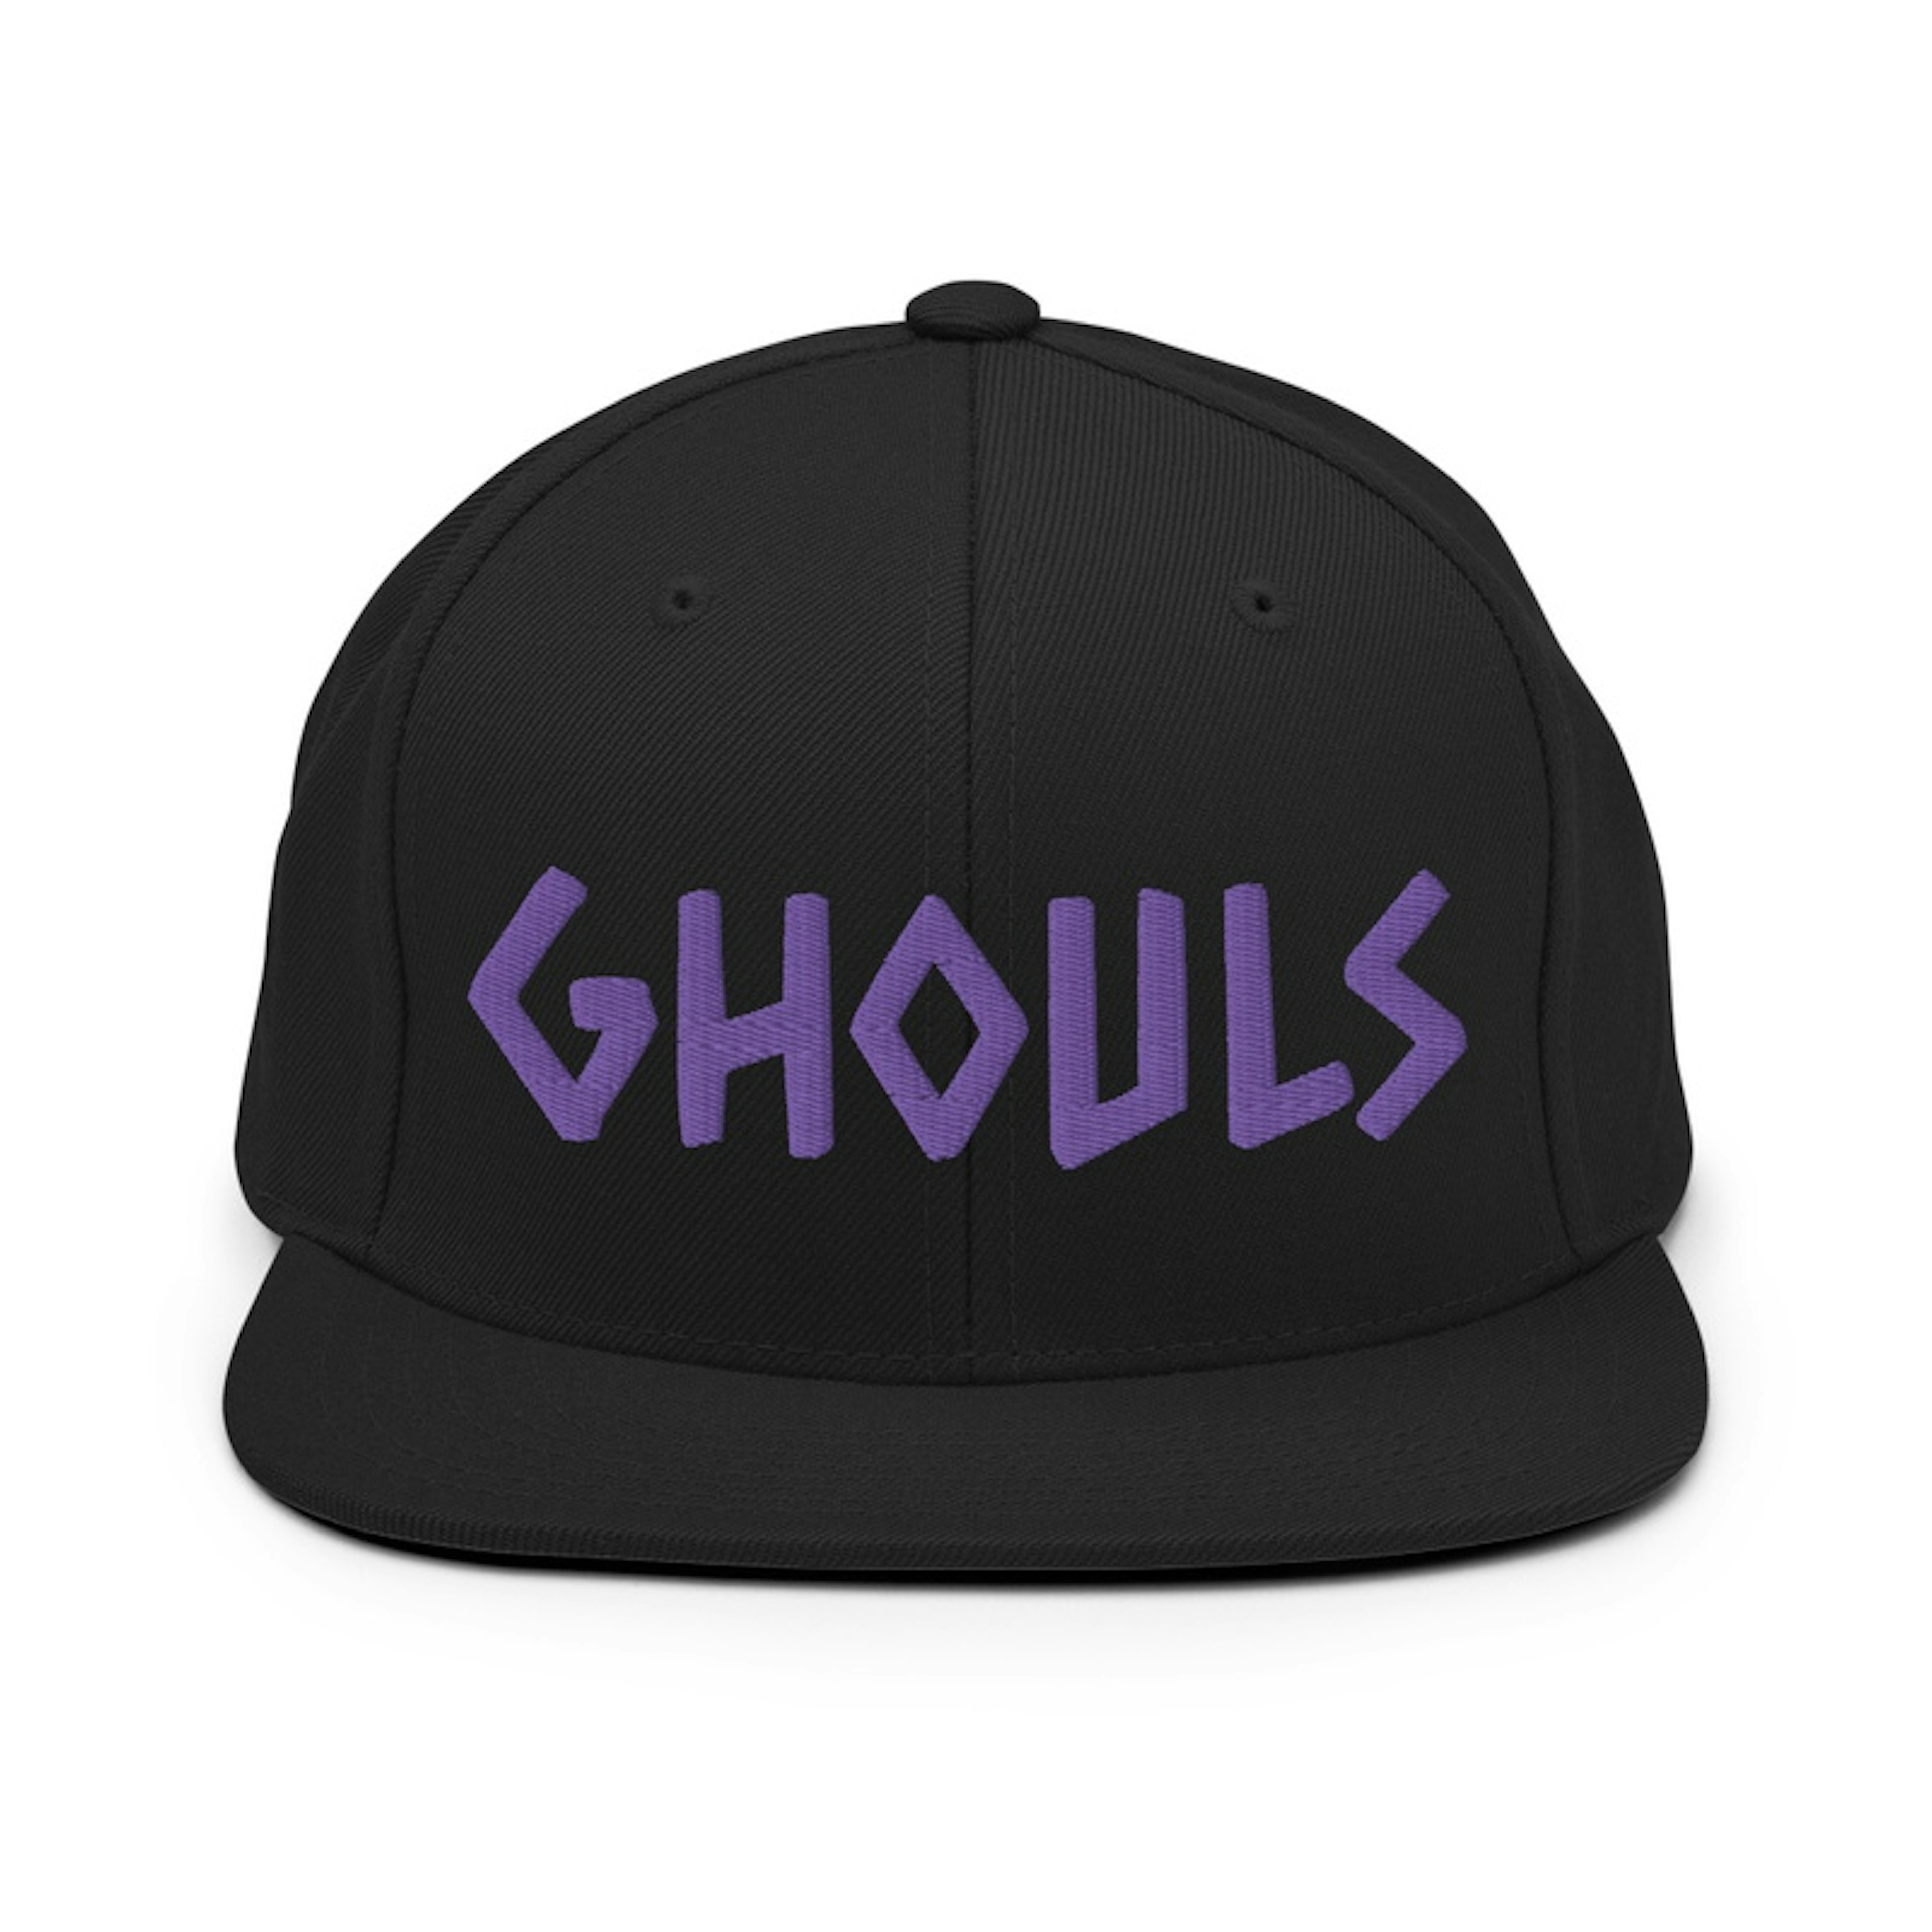 Ghouls hat Redux